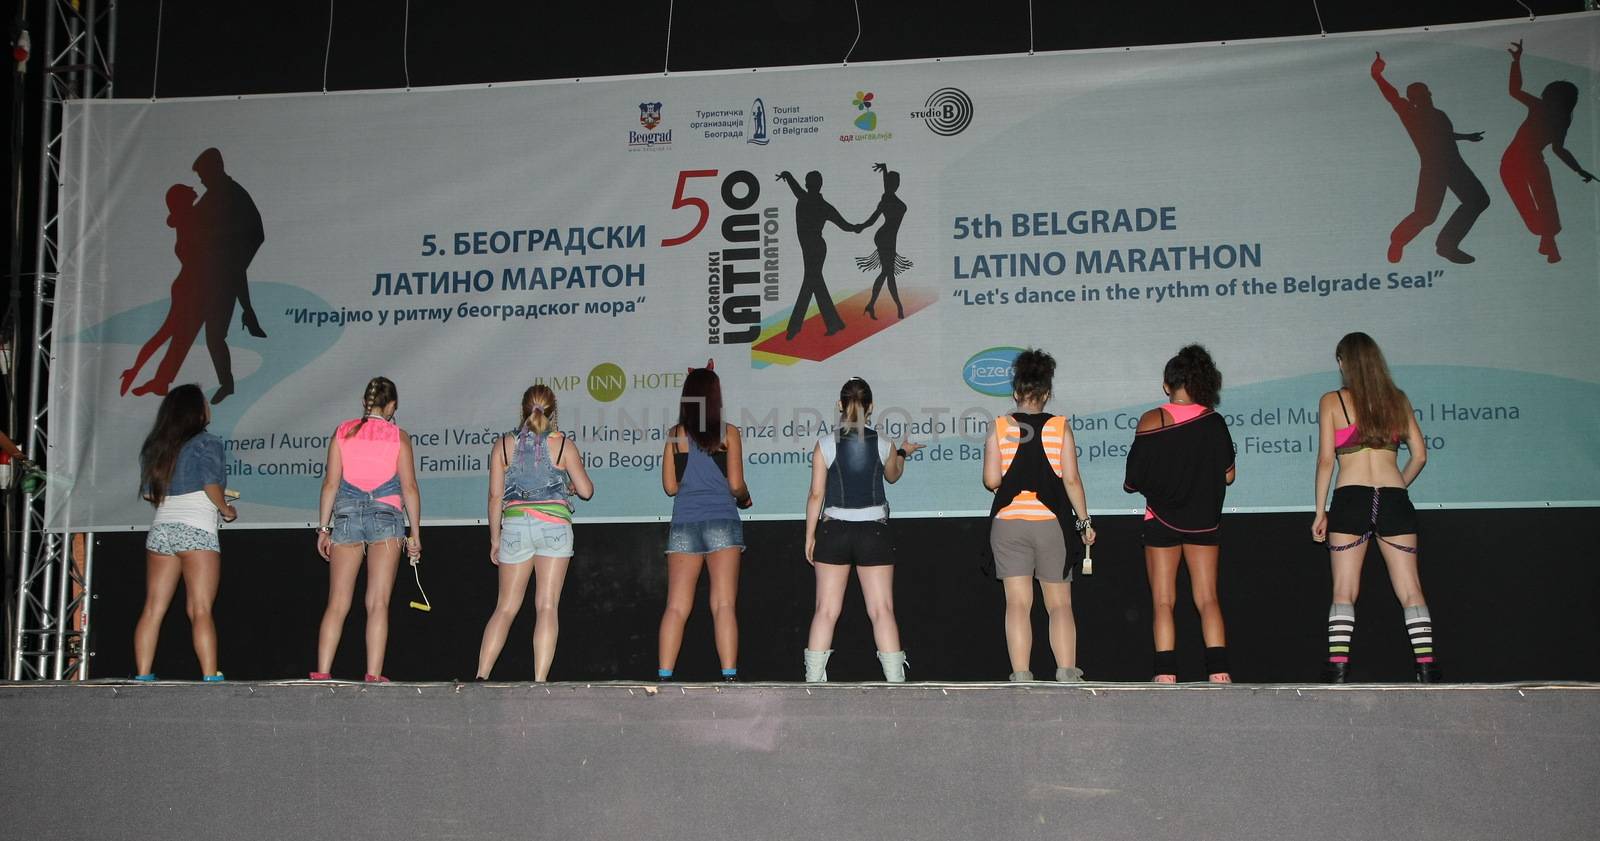 Latino marathon by tdjoric